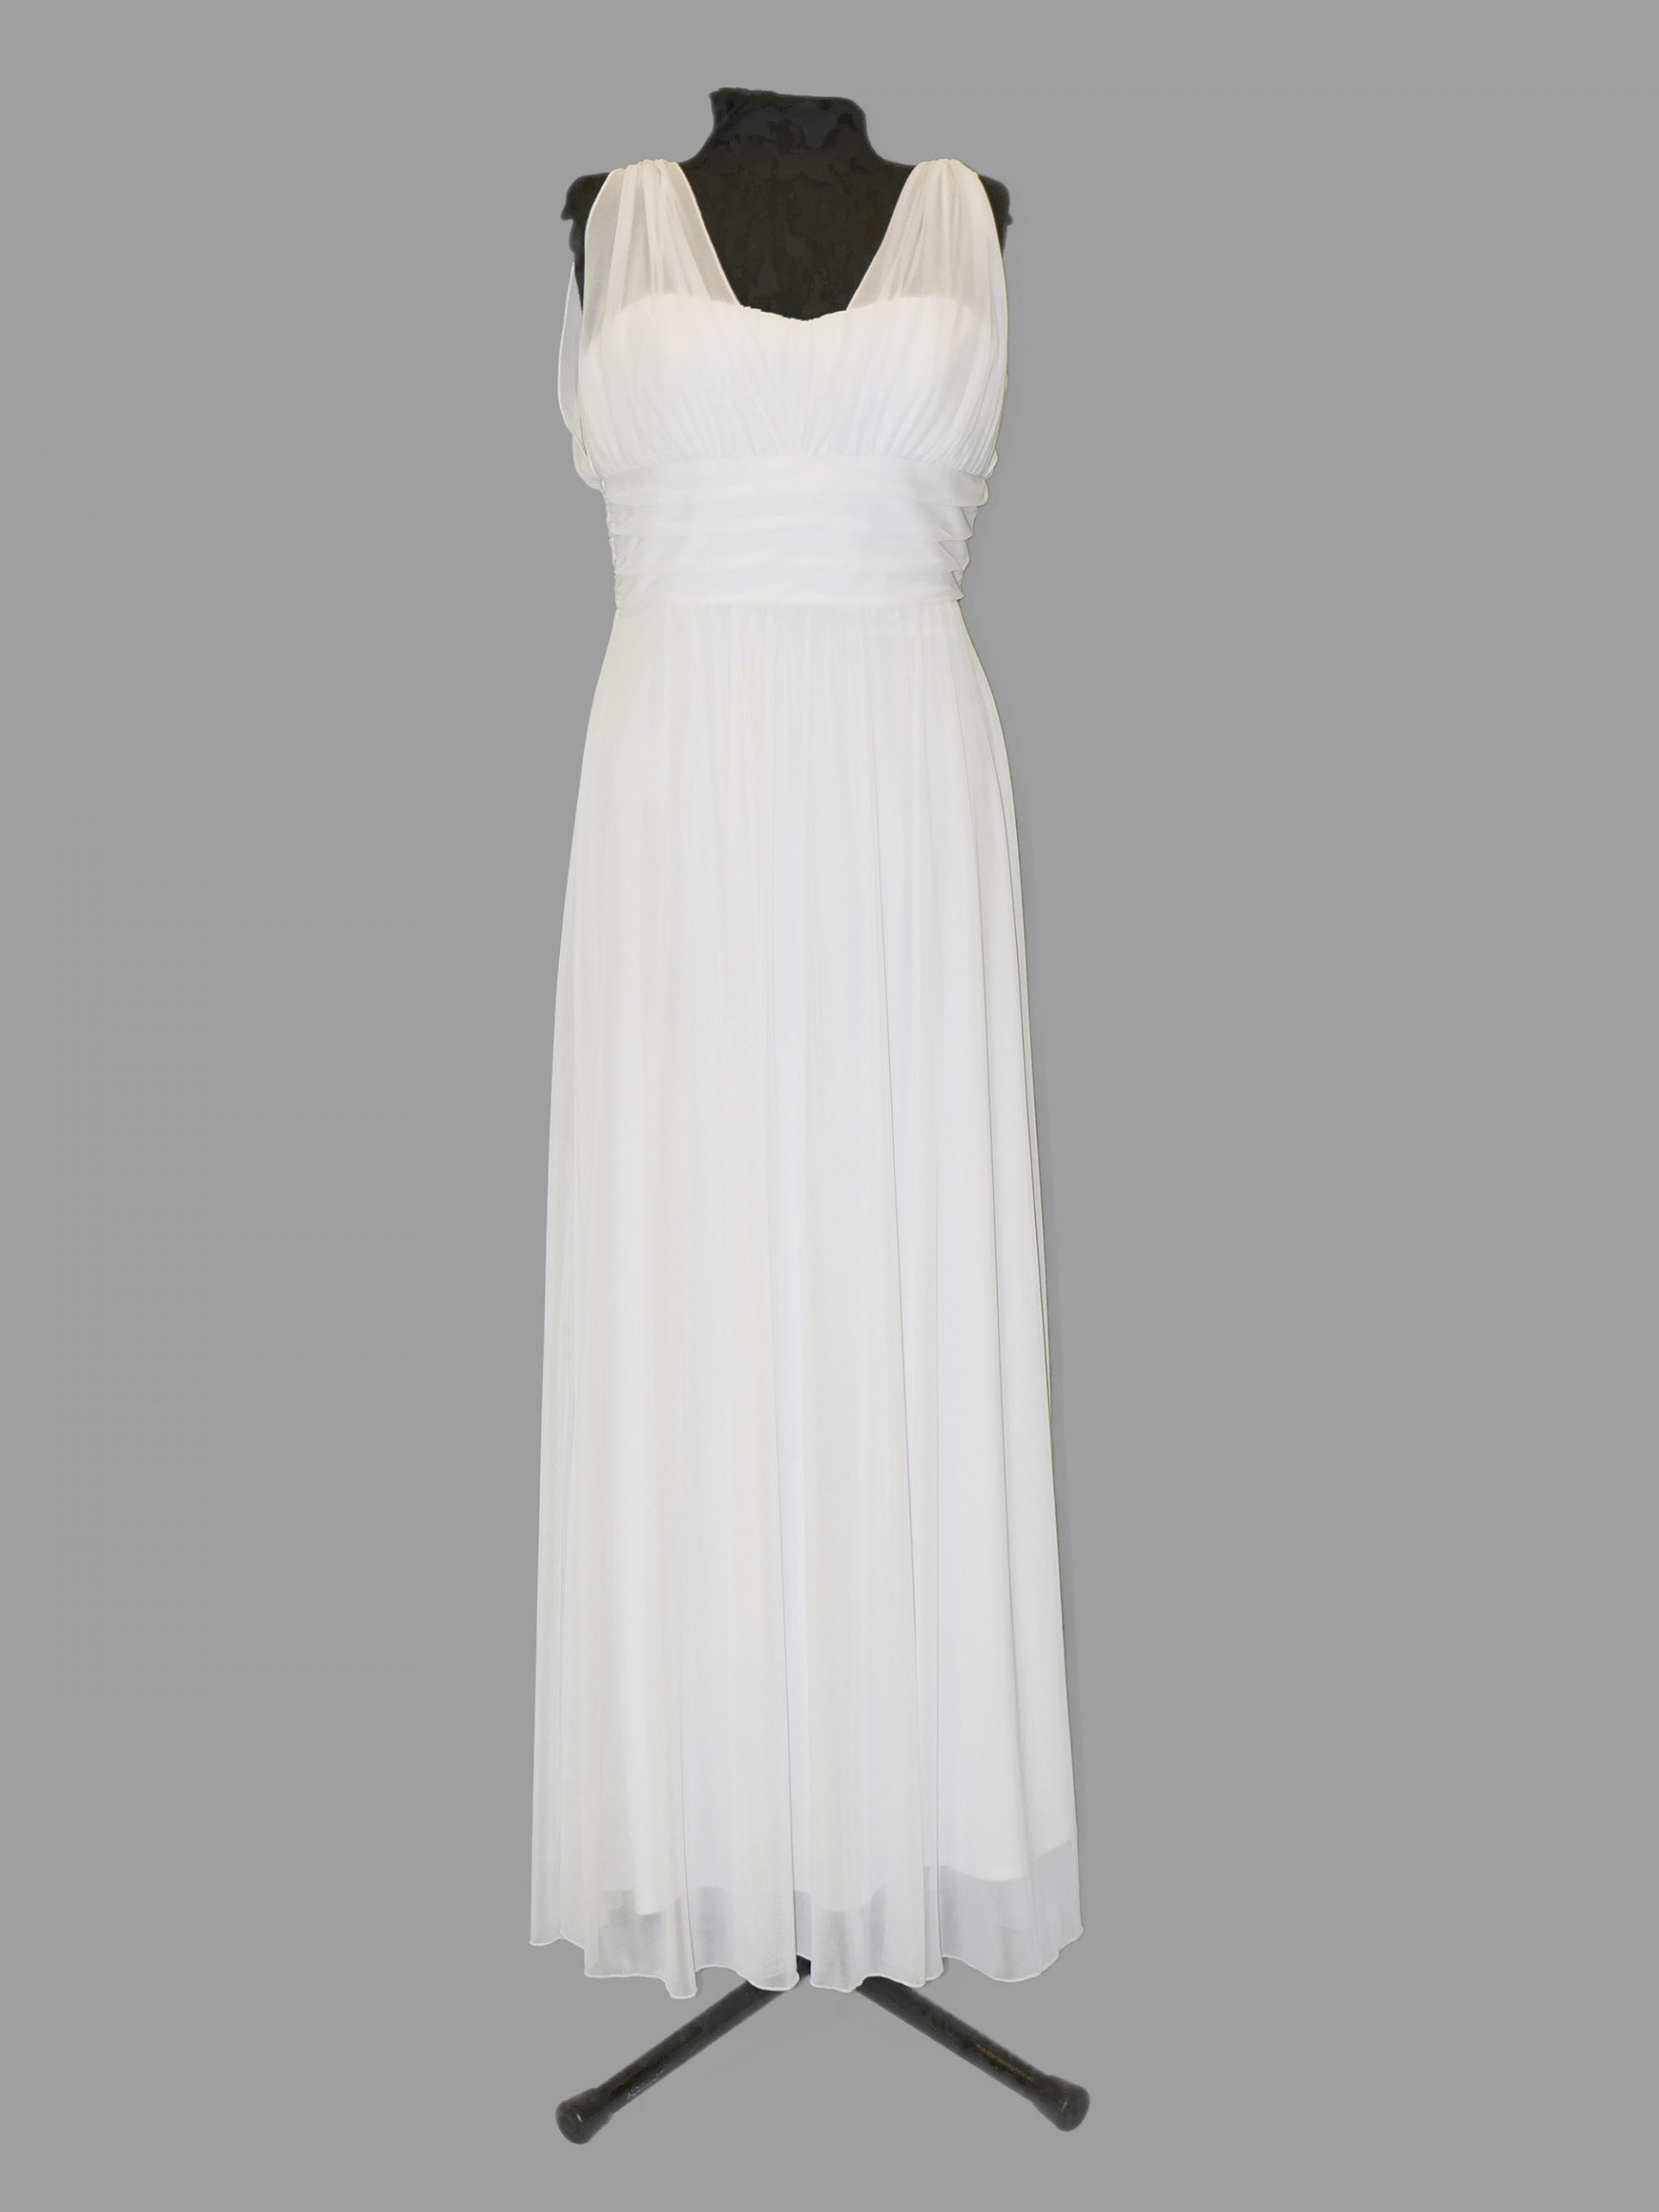 Simple Bridal or Debutante Gown, Mr K, KB4681, size 8